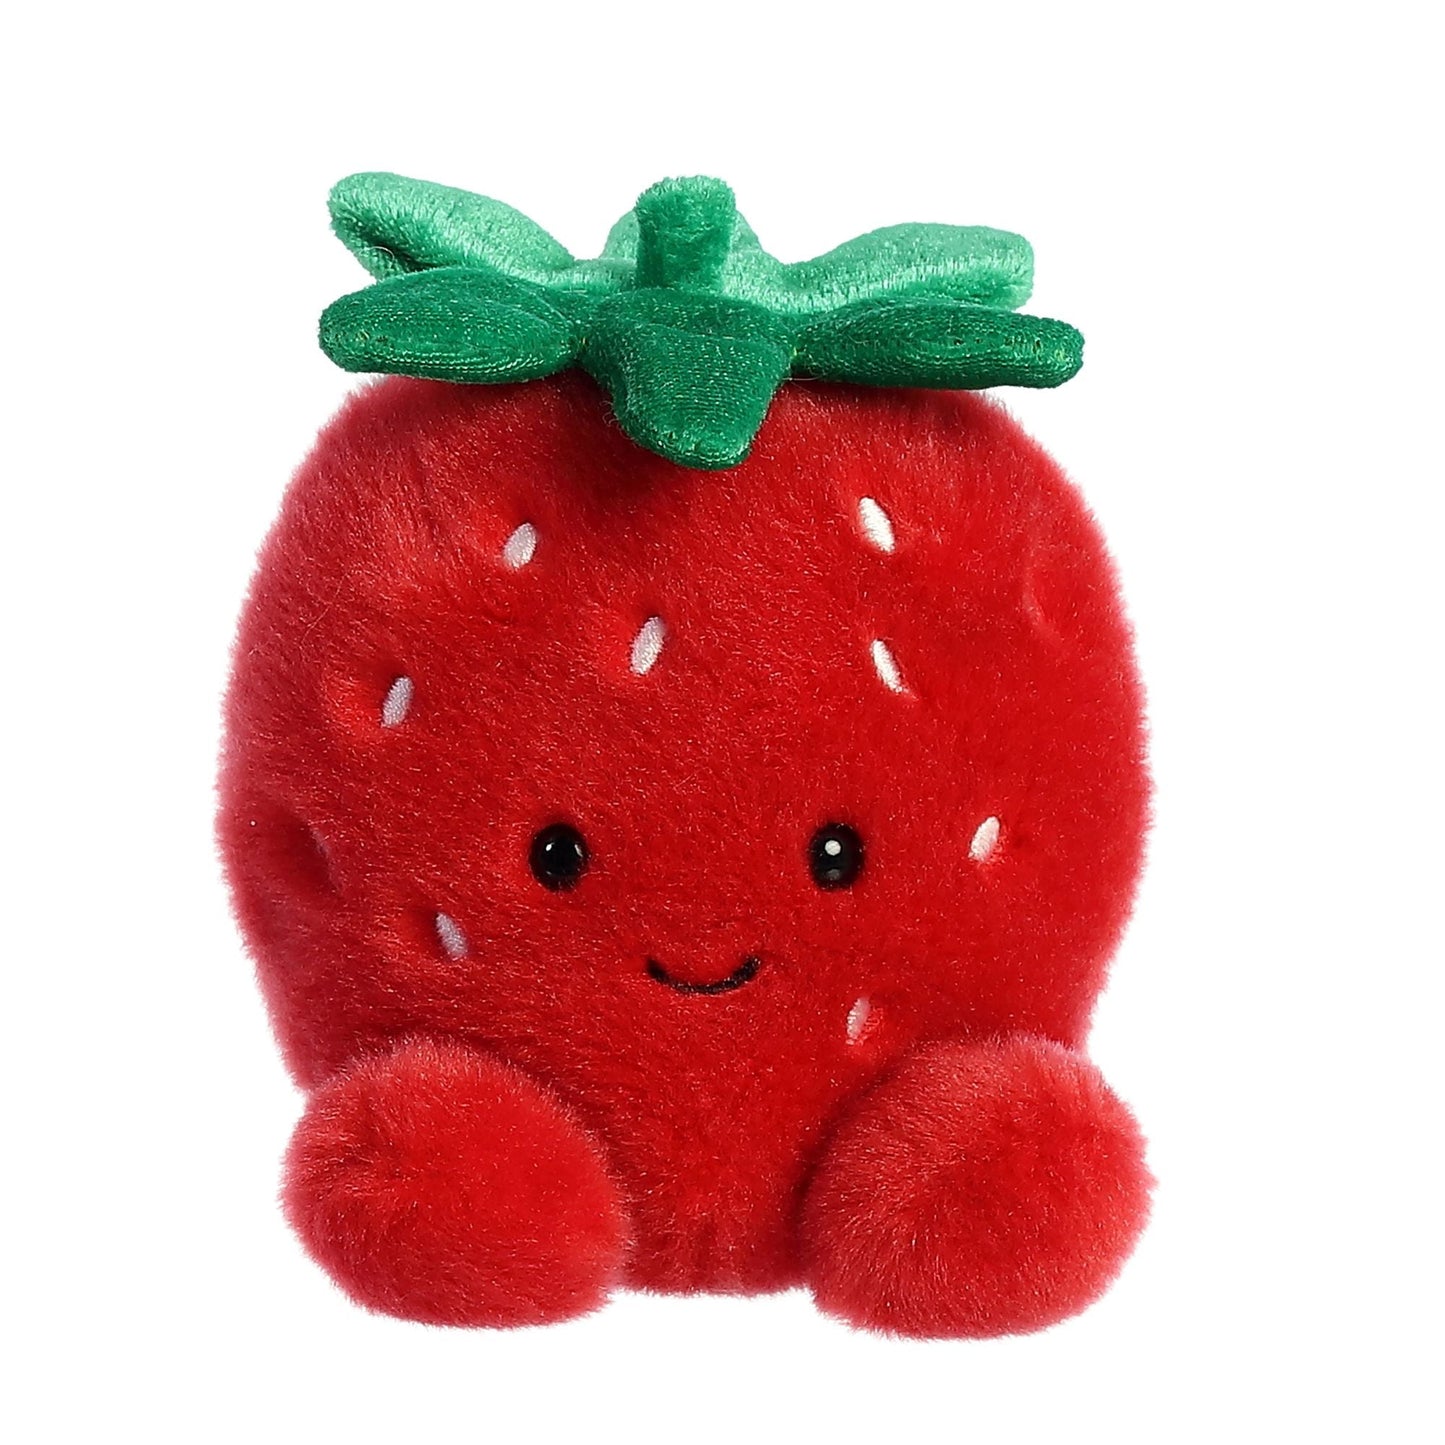 Juicy Strawberry 5”